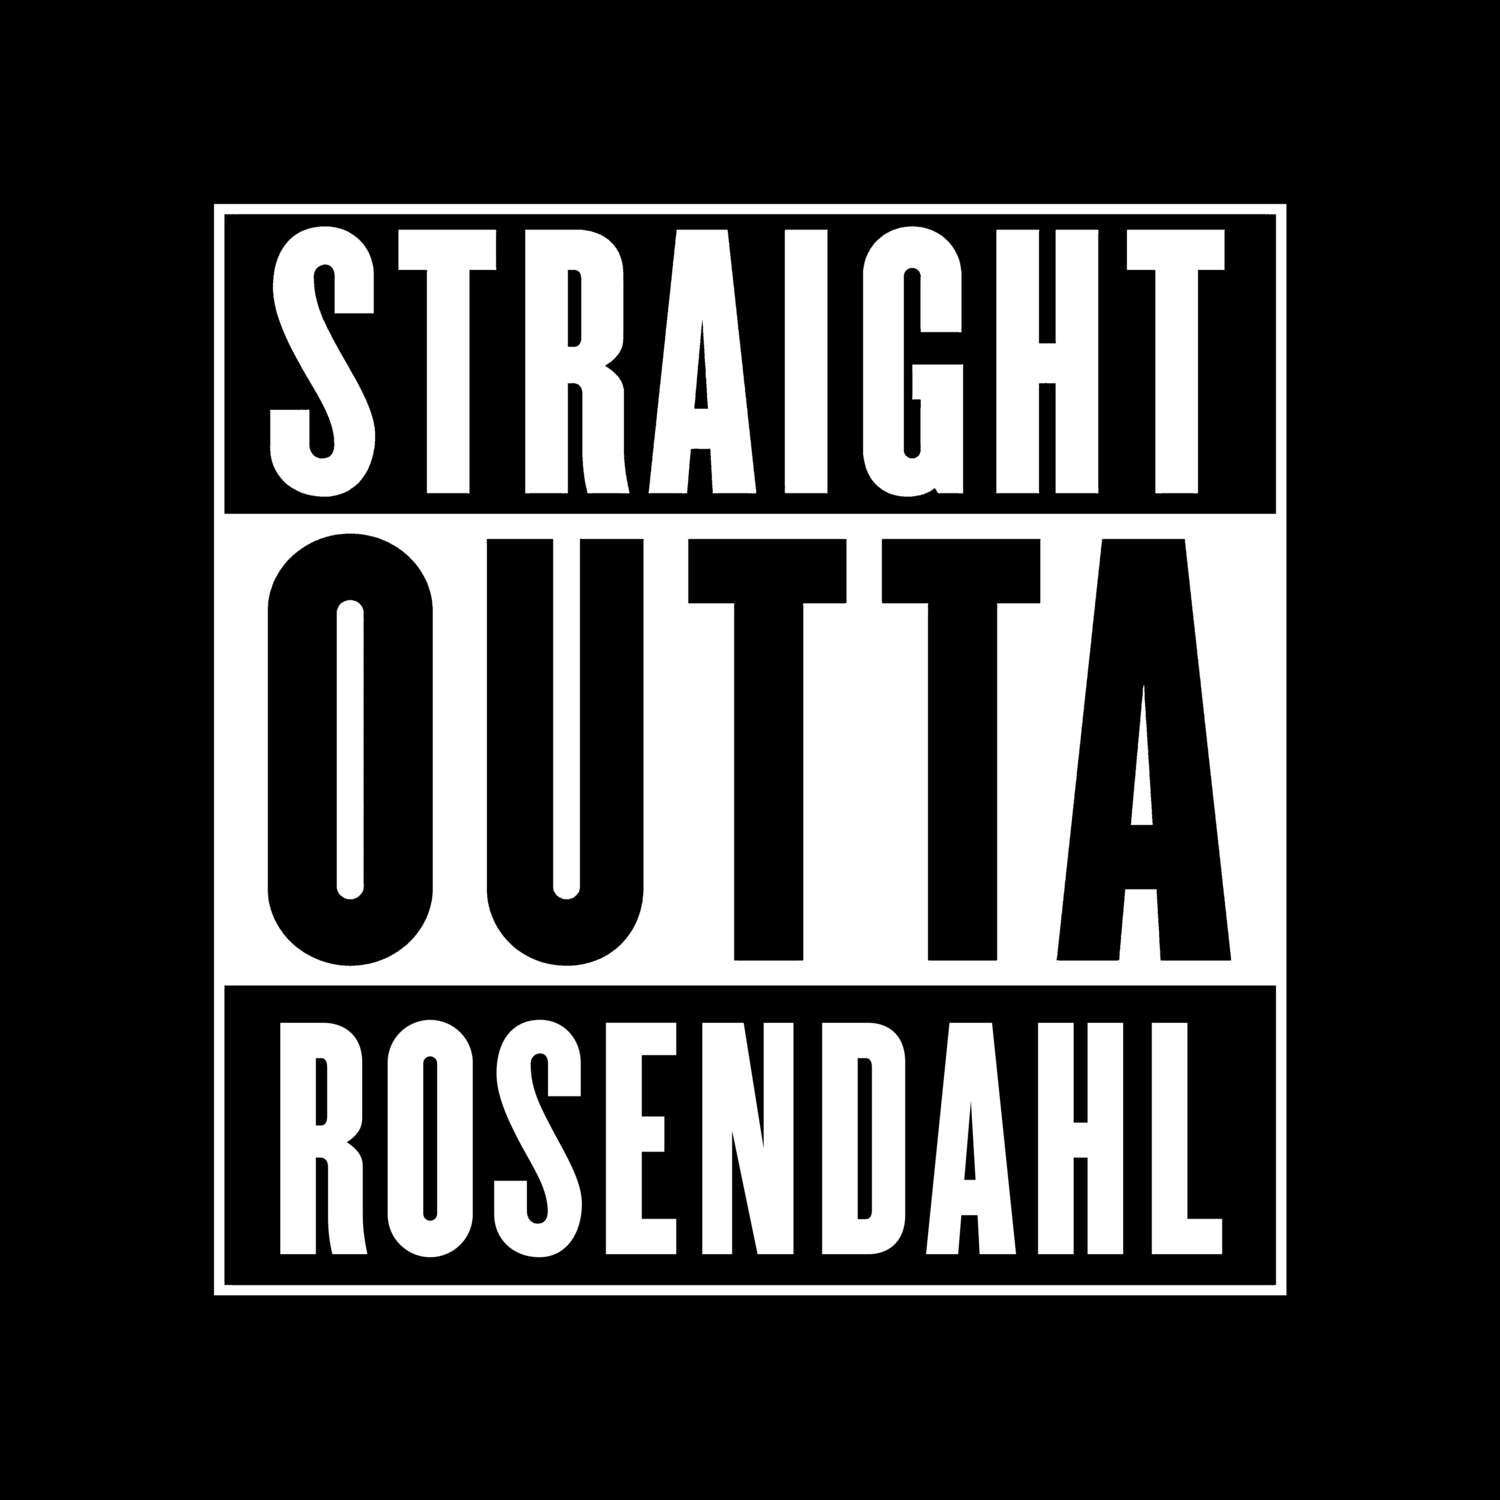 Rosendahl T-Shirt »Straight Outta«